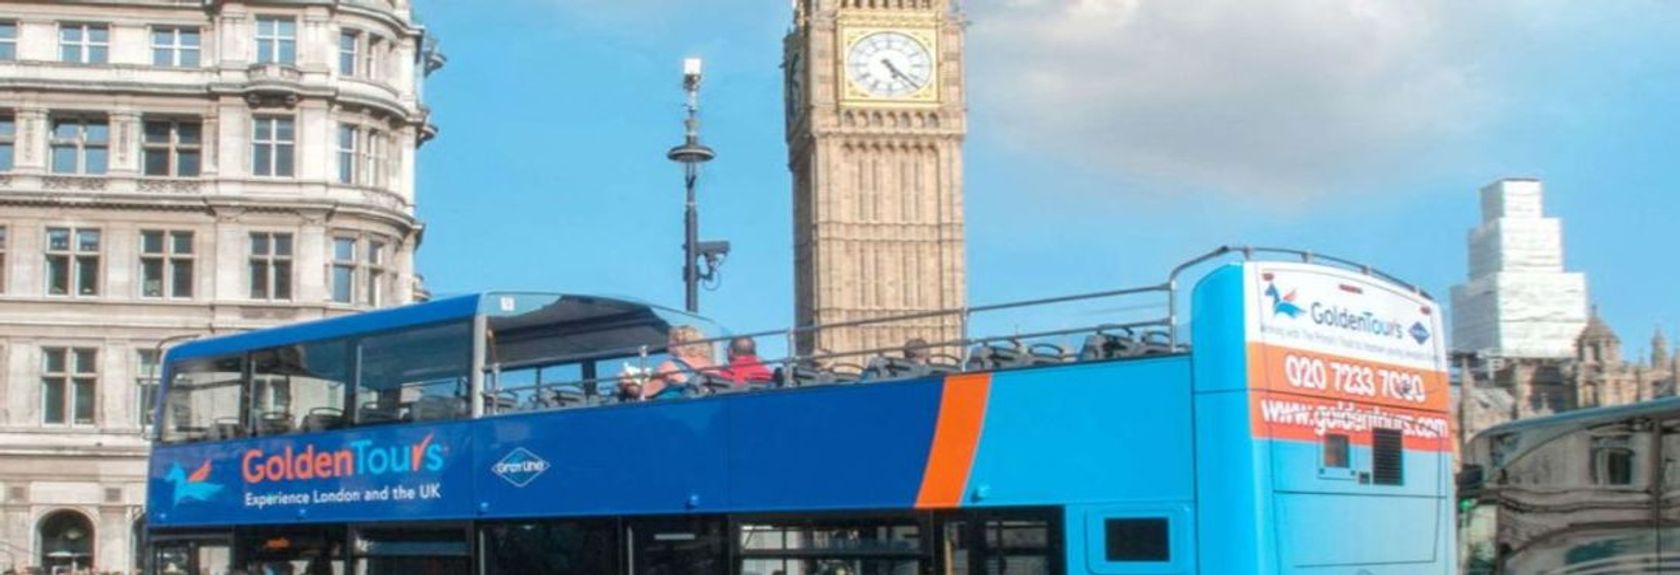 London Hop on Hop off ônibus - bilhete 24 & 48 horas